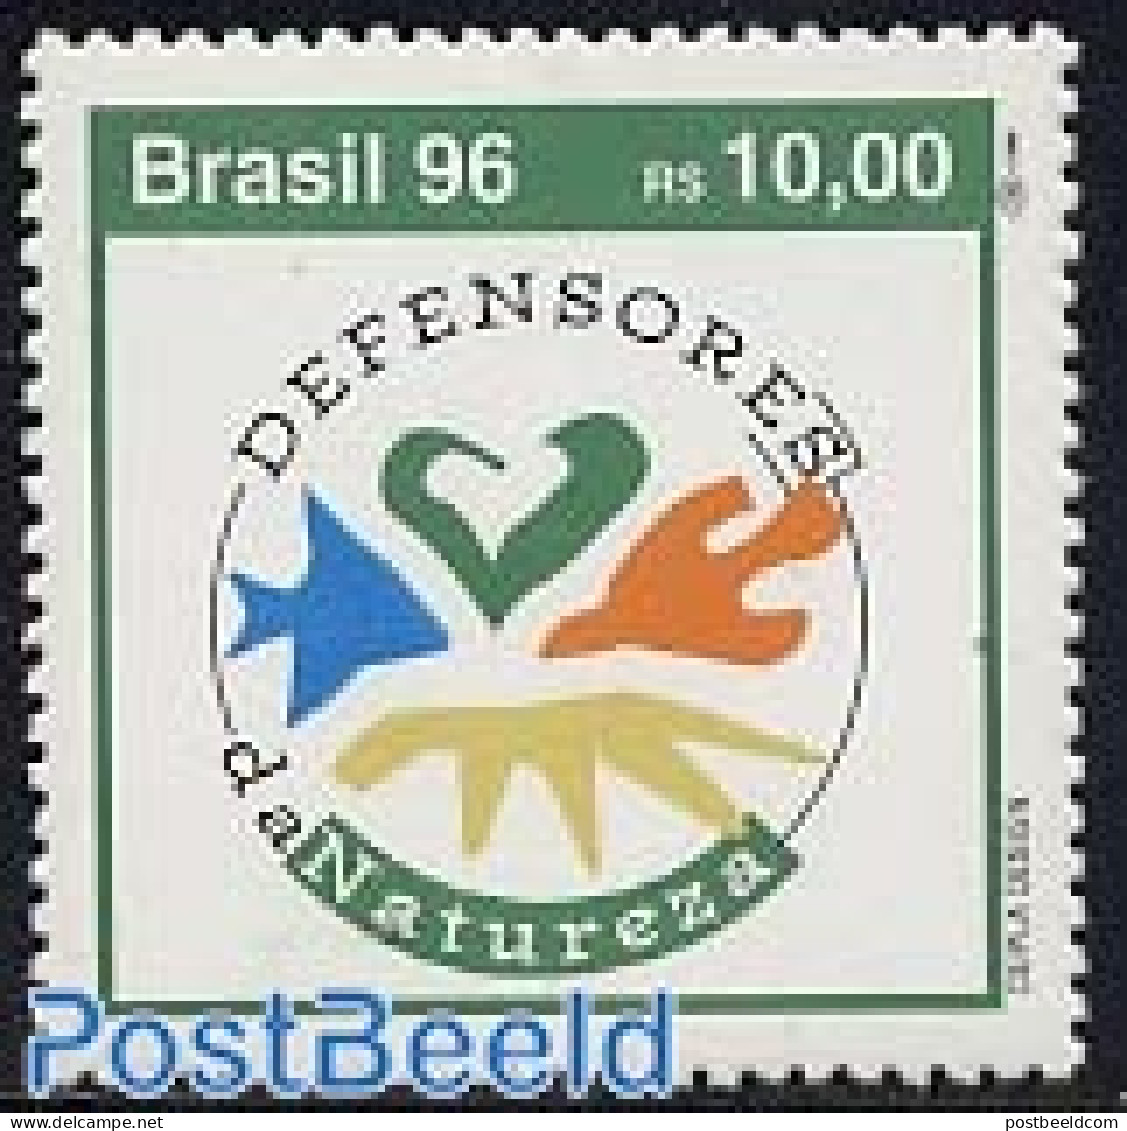 Brazil 1996 Nature Protection 1v, Mint NH, Nature - Environment - Fish - Ungebraucht